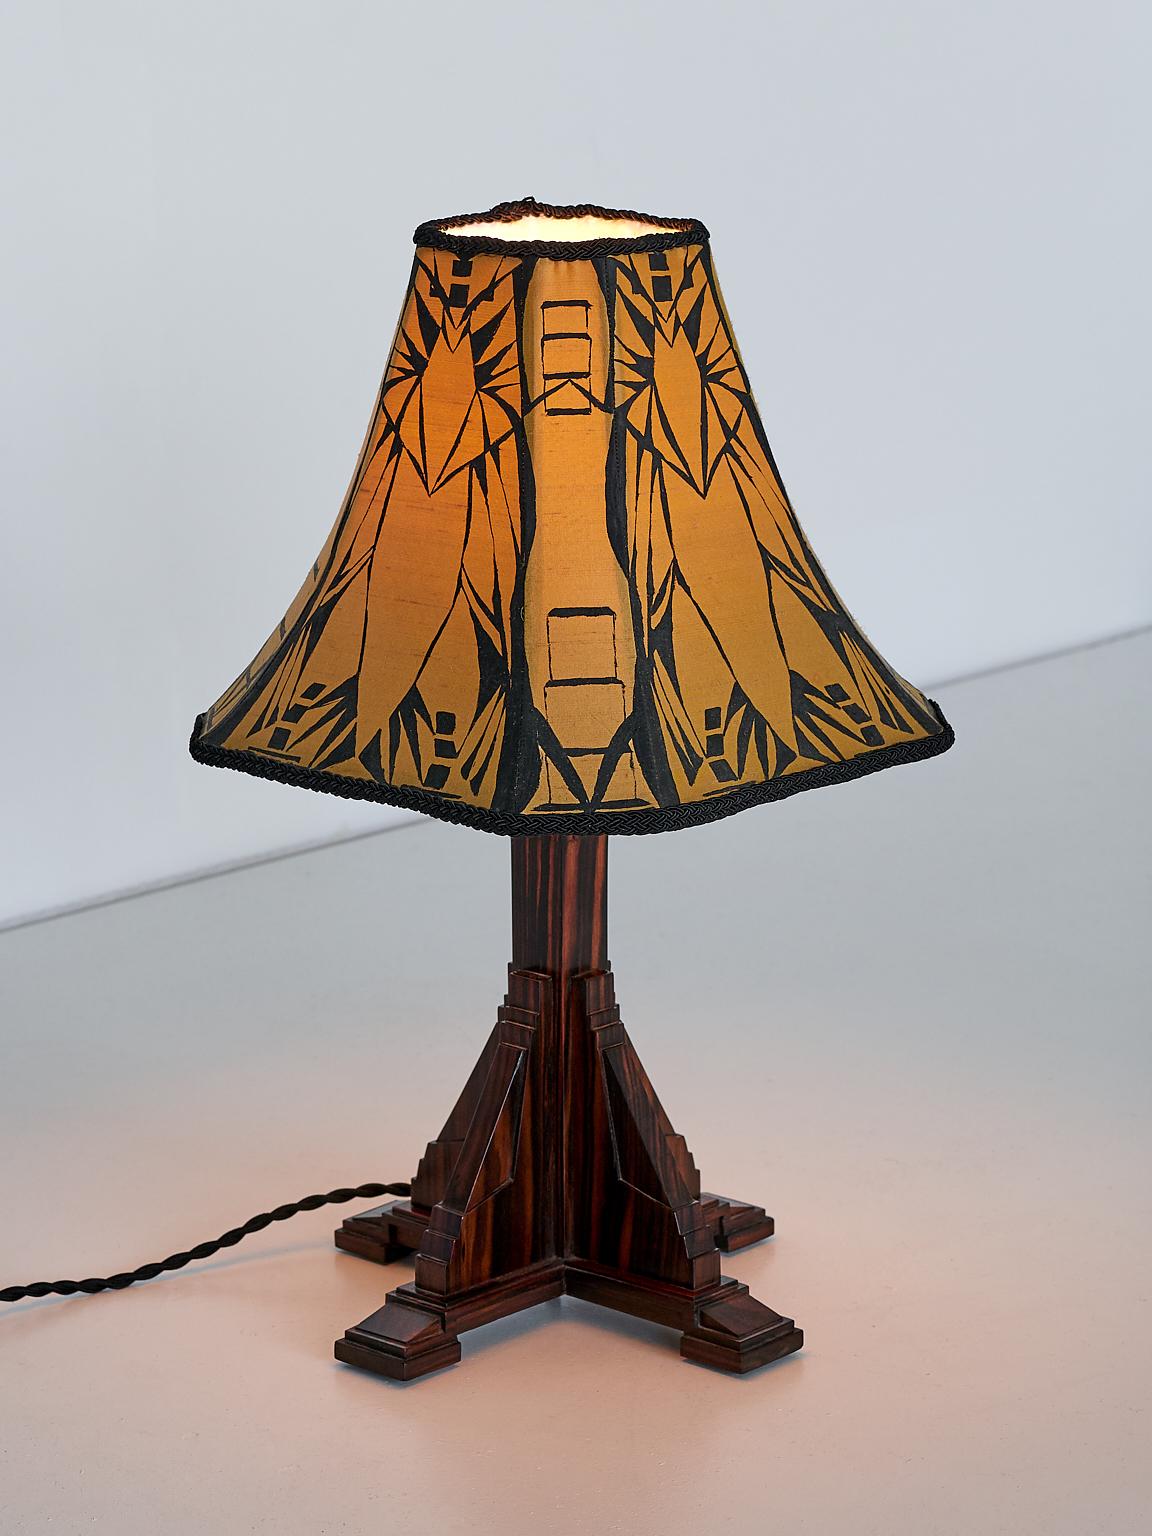 Fabric Art Deco Amsterdam School Table Lamp in Macassar Ebony, Netherlands, 1930s